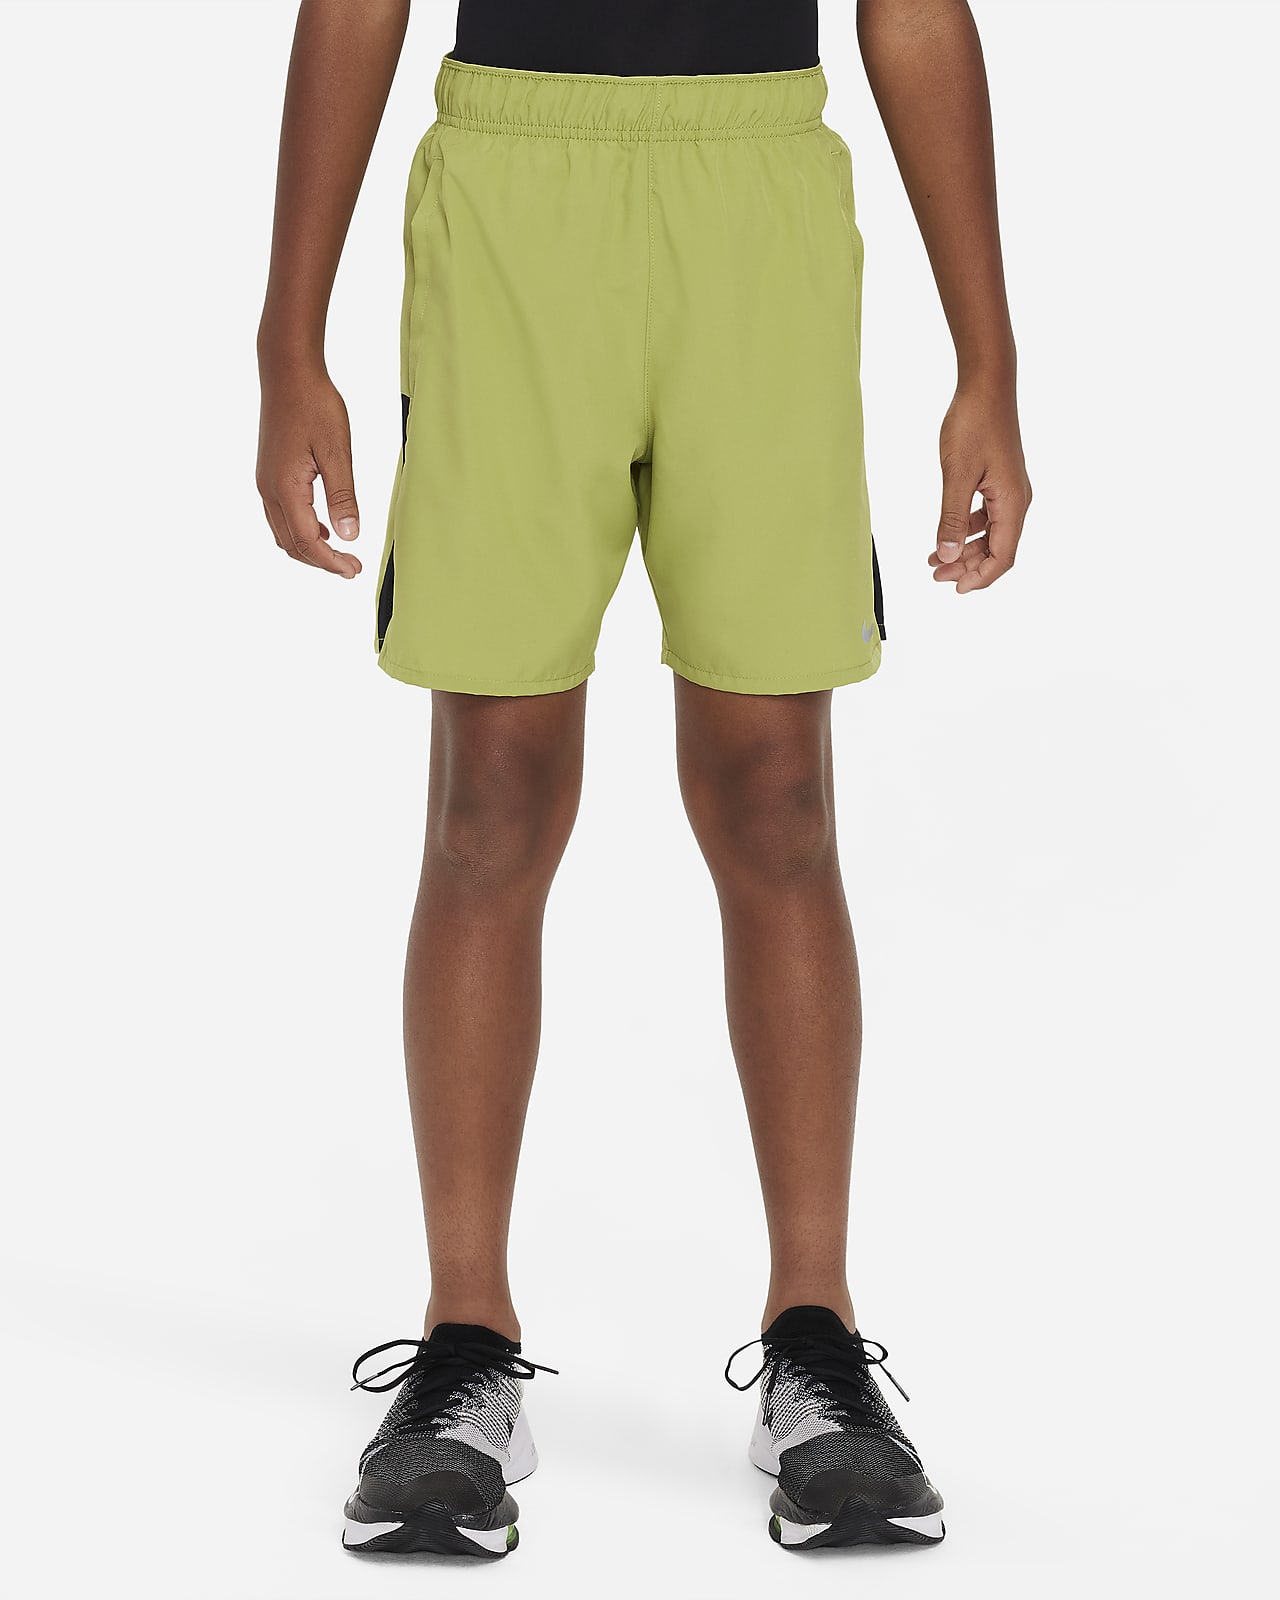 Nike Shorts Girls Large Green Dri-Fit Training Running Athletic